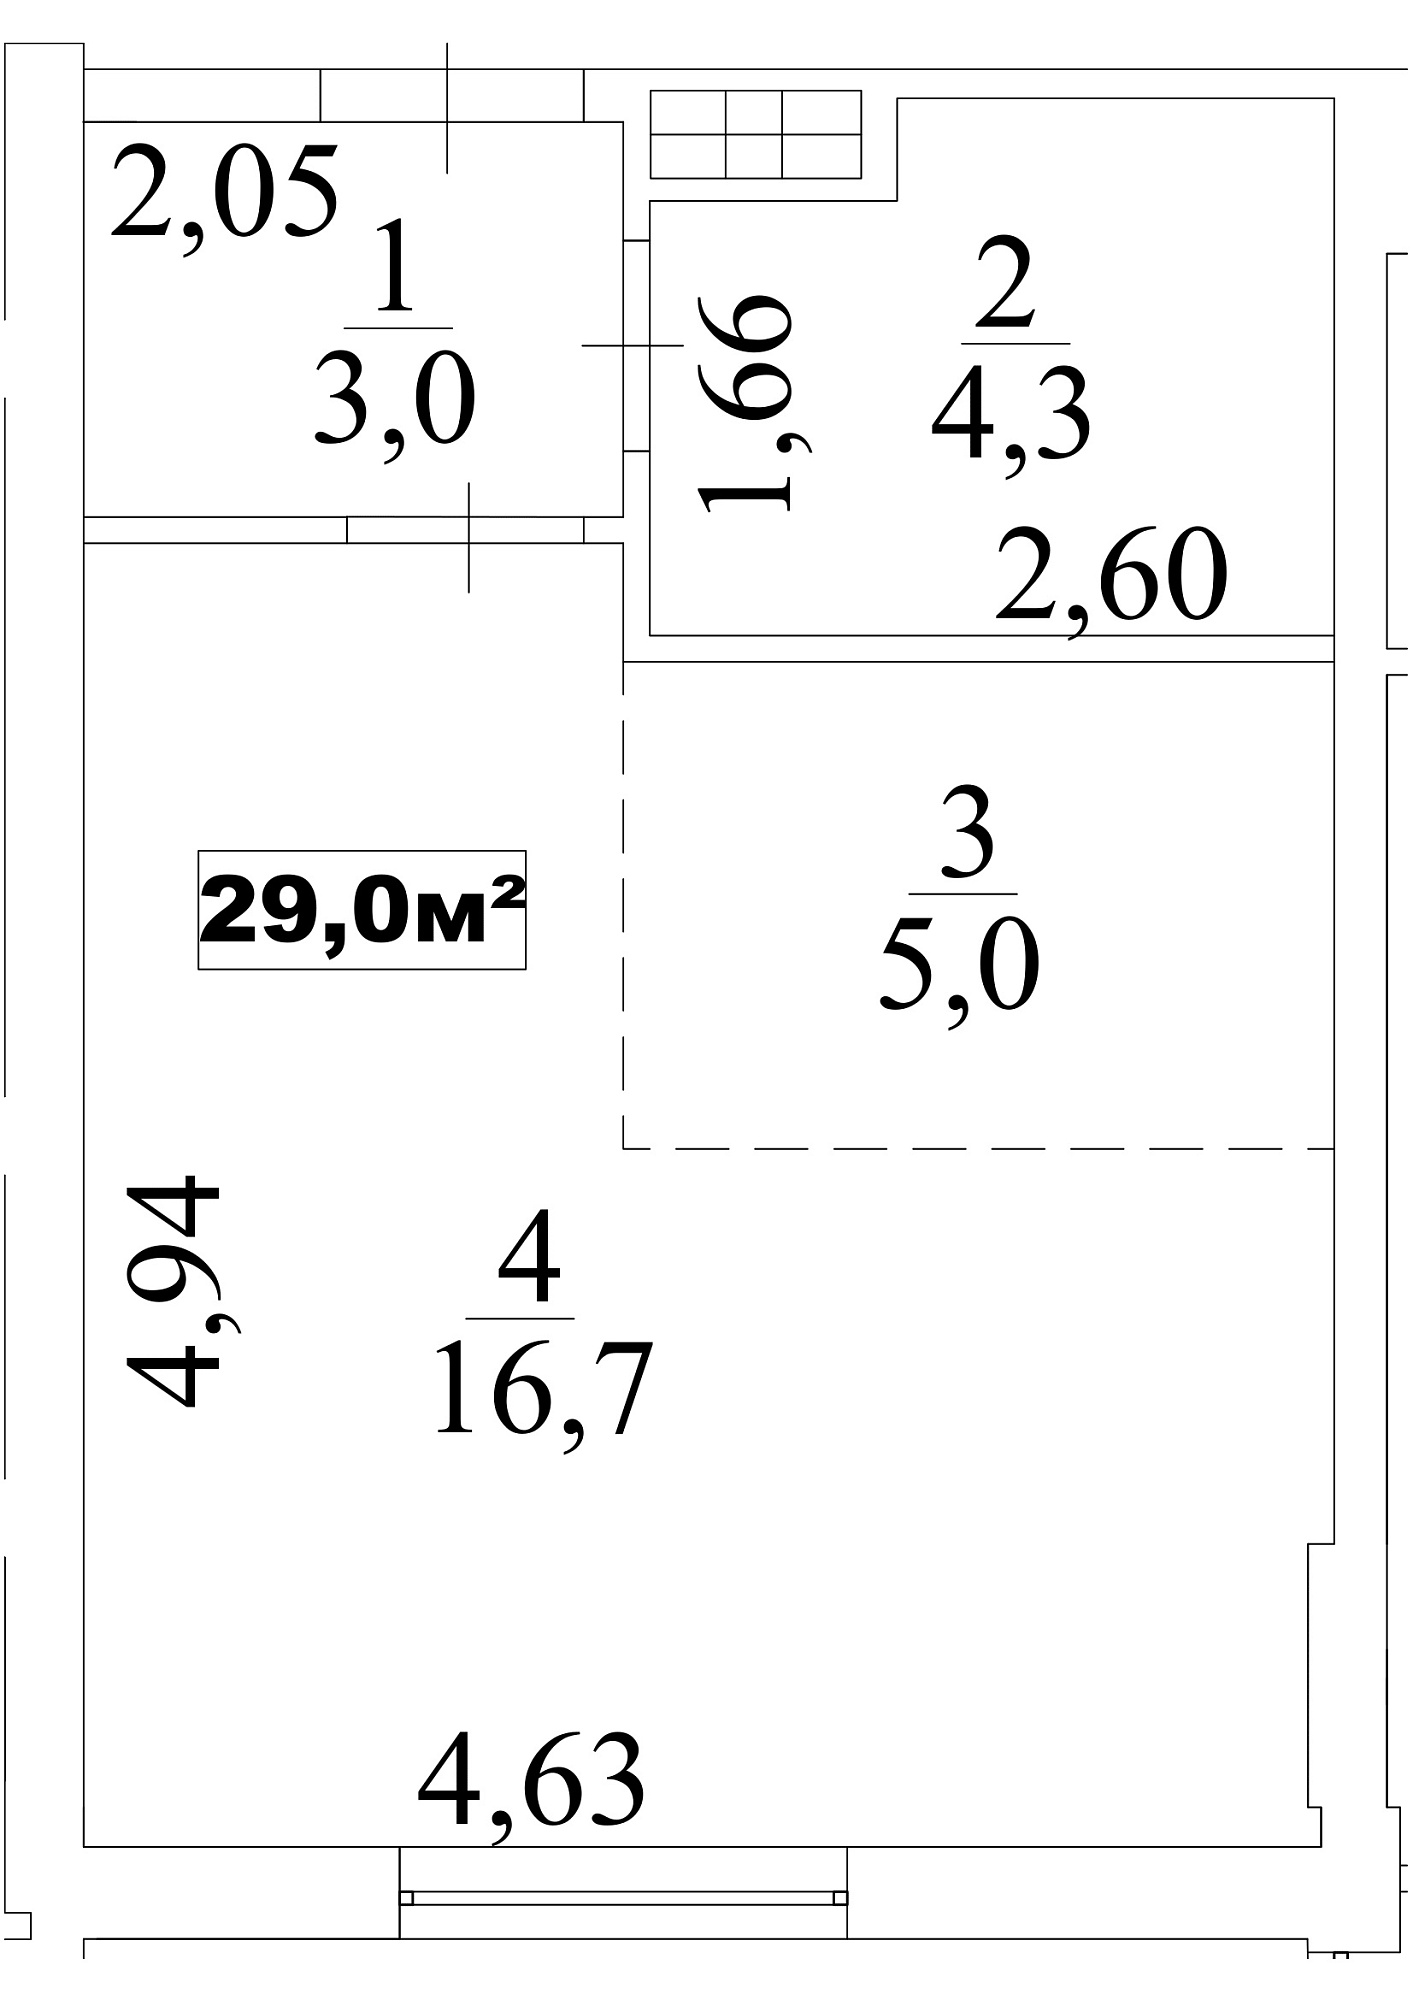 Planning Smart flats area 29m2, AB-10-01/00009.